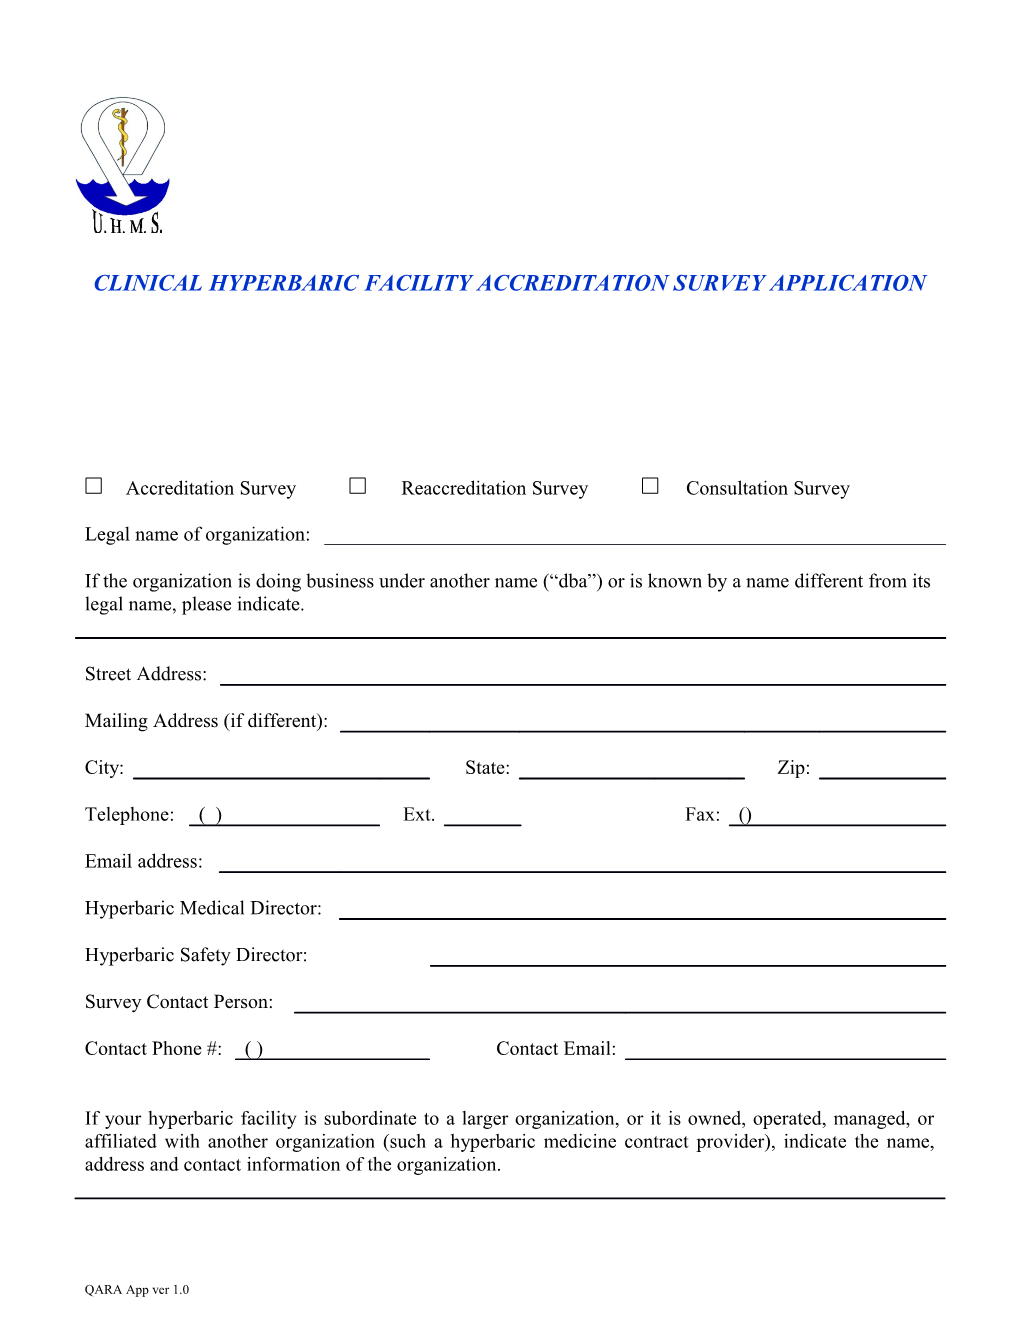 Clinical Hyperbaric Facility Accreditation Survey Application